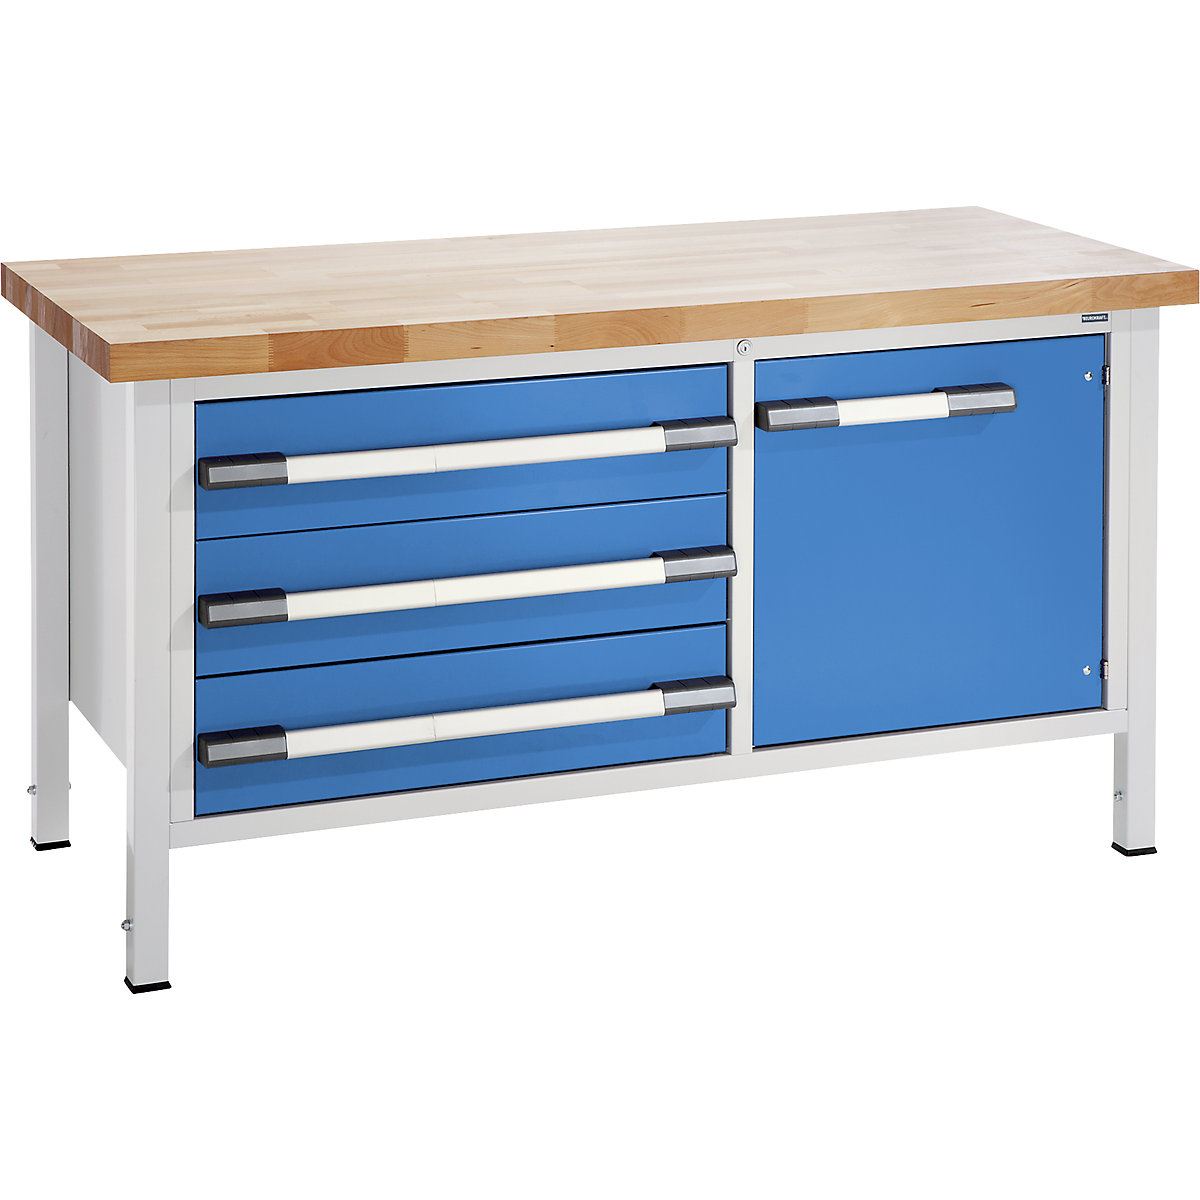 EUROKRAFTpro – Height-adjustable workbench, frame construction, width 1500 mm, 3 x 180 mm drawers, 1 door, grey / blue